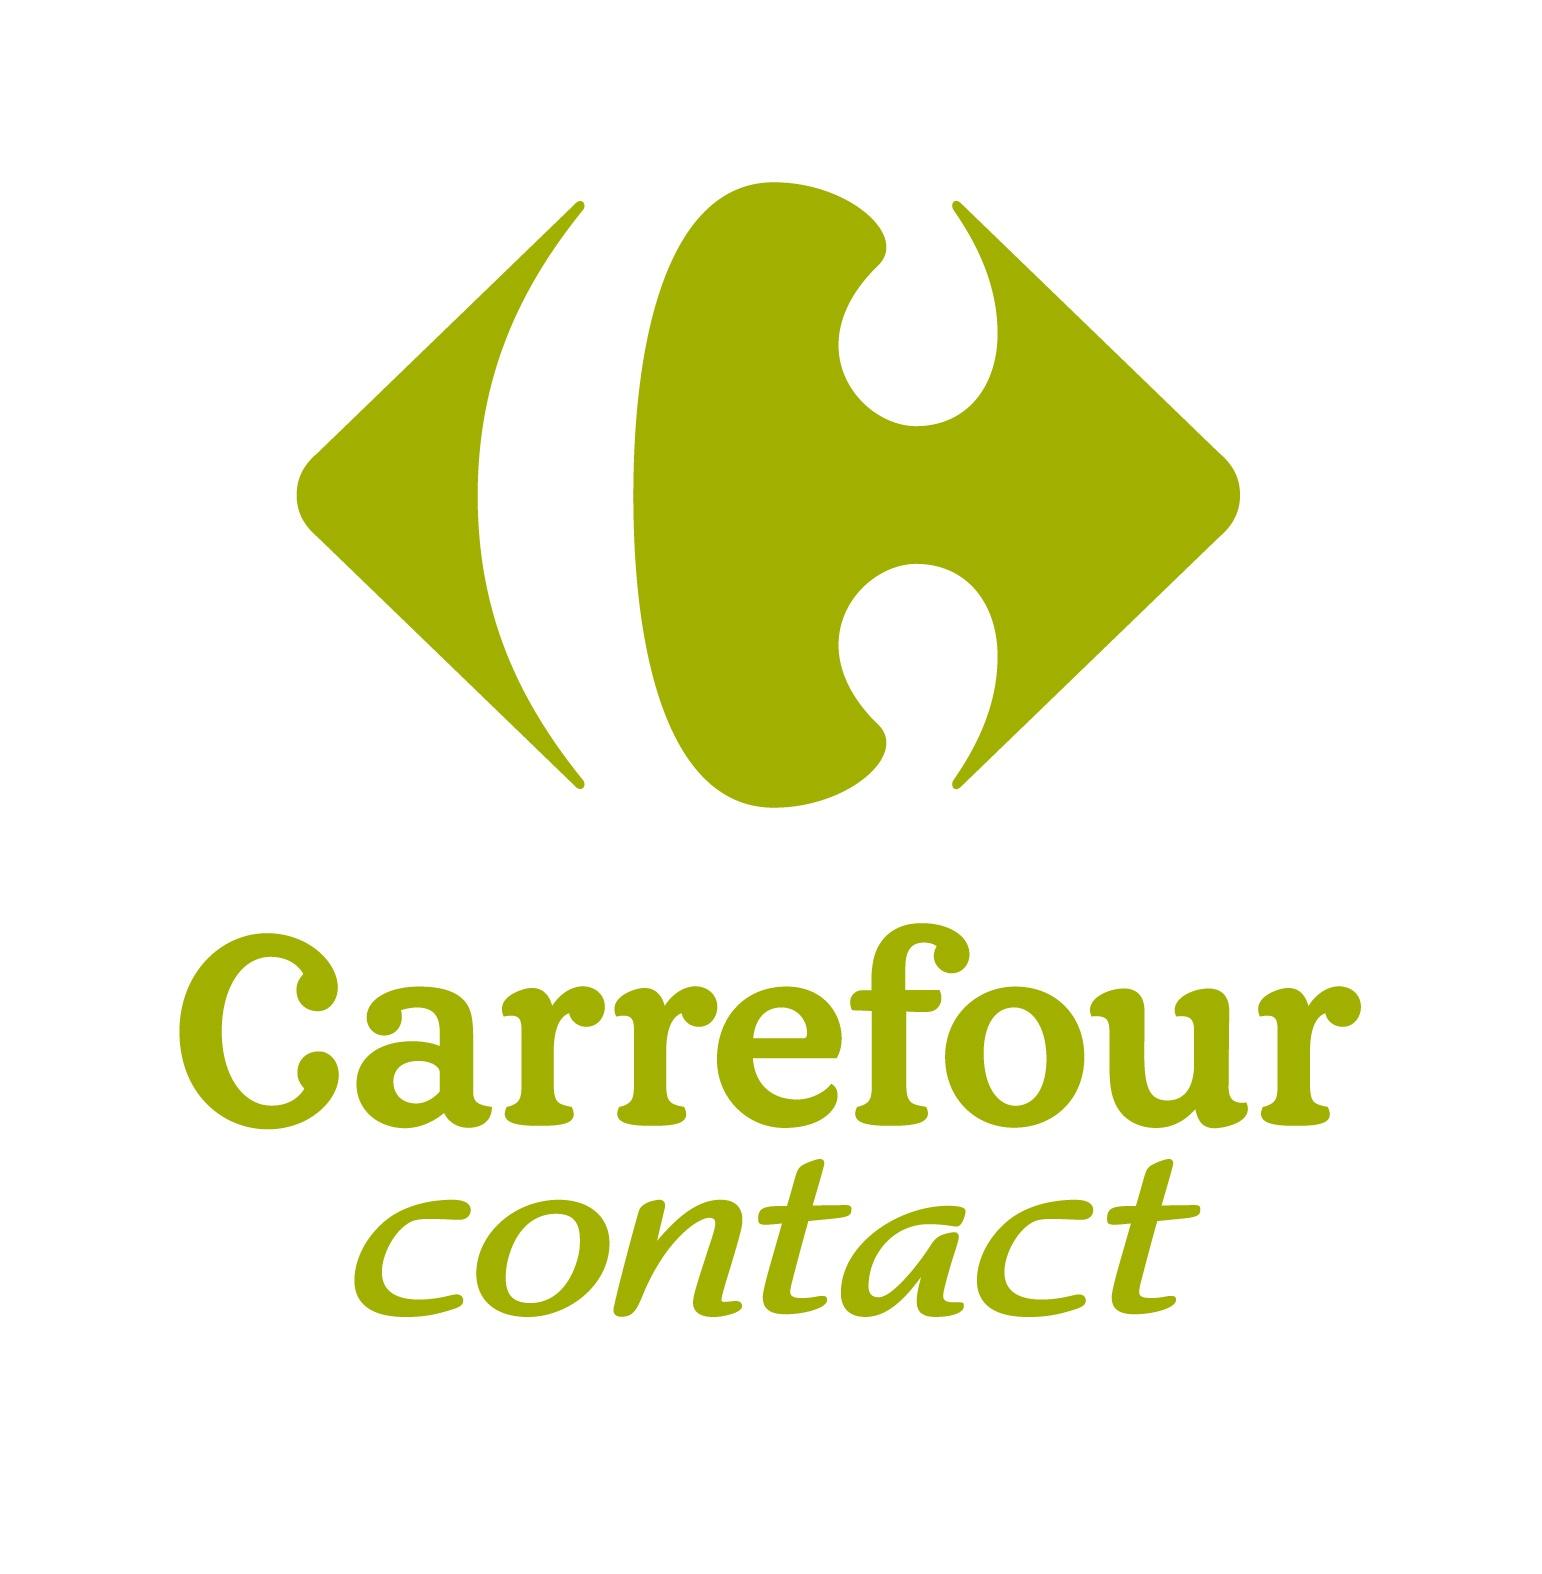 Carrefour Contact Petite Forêt